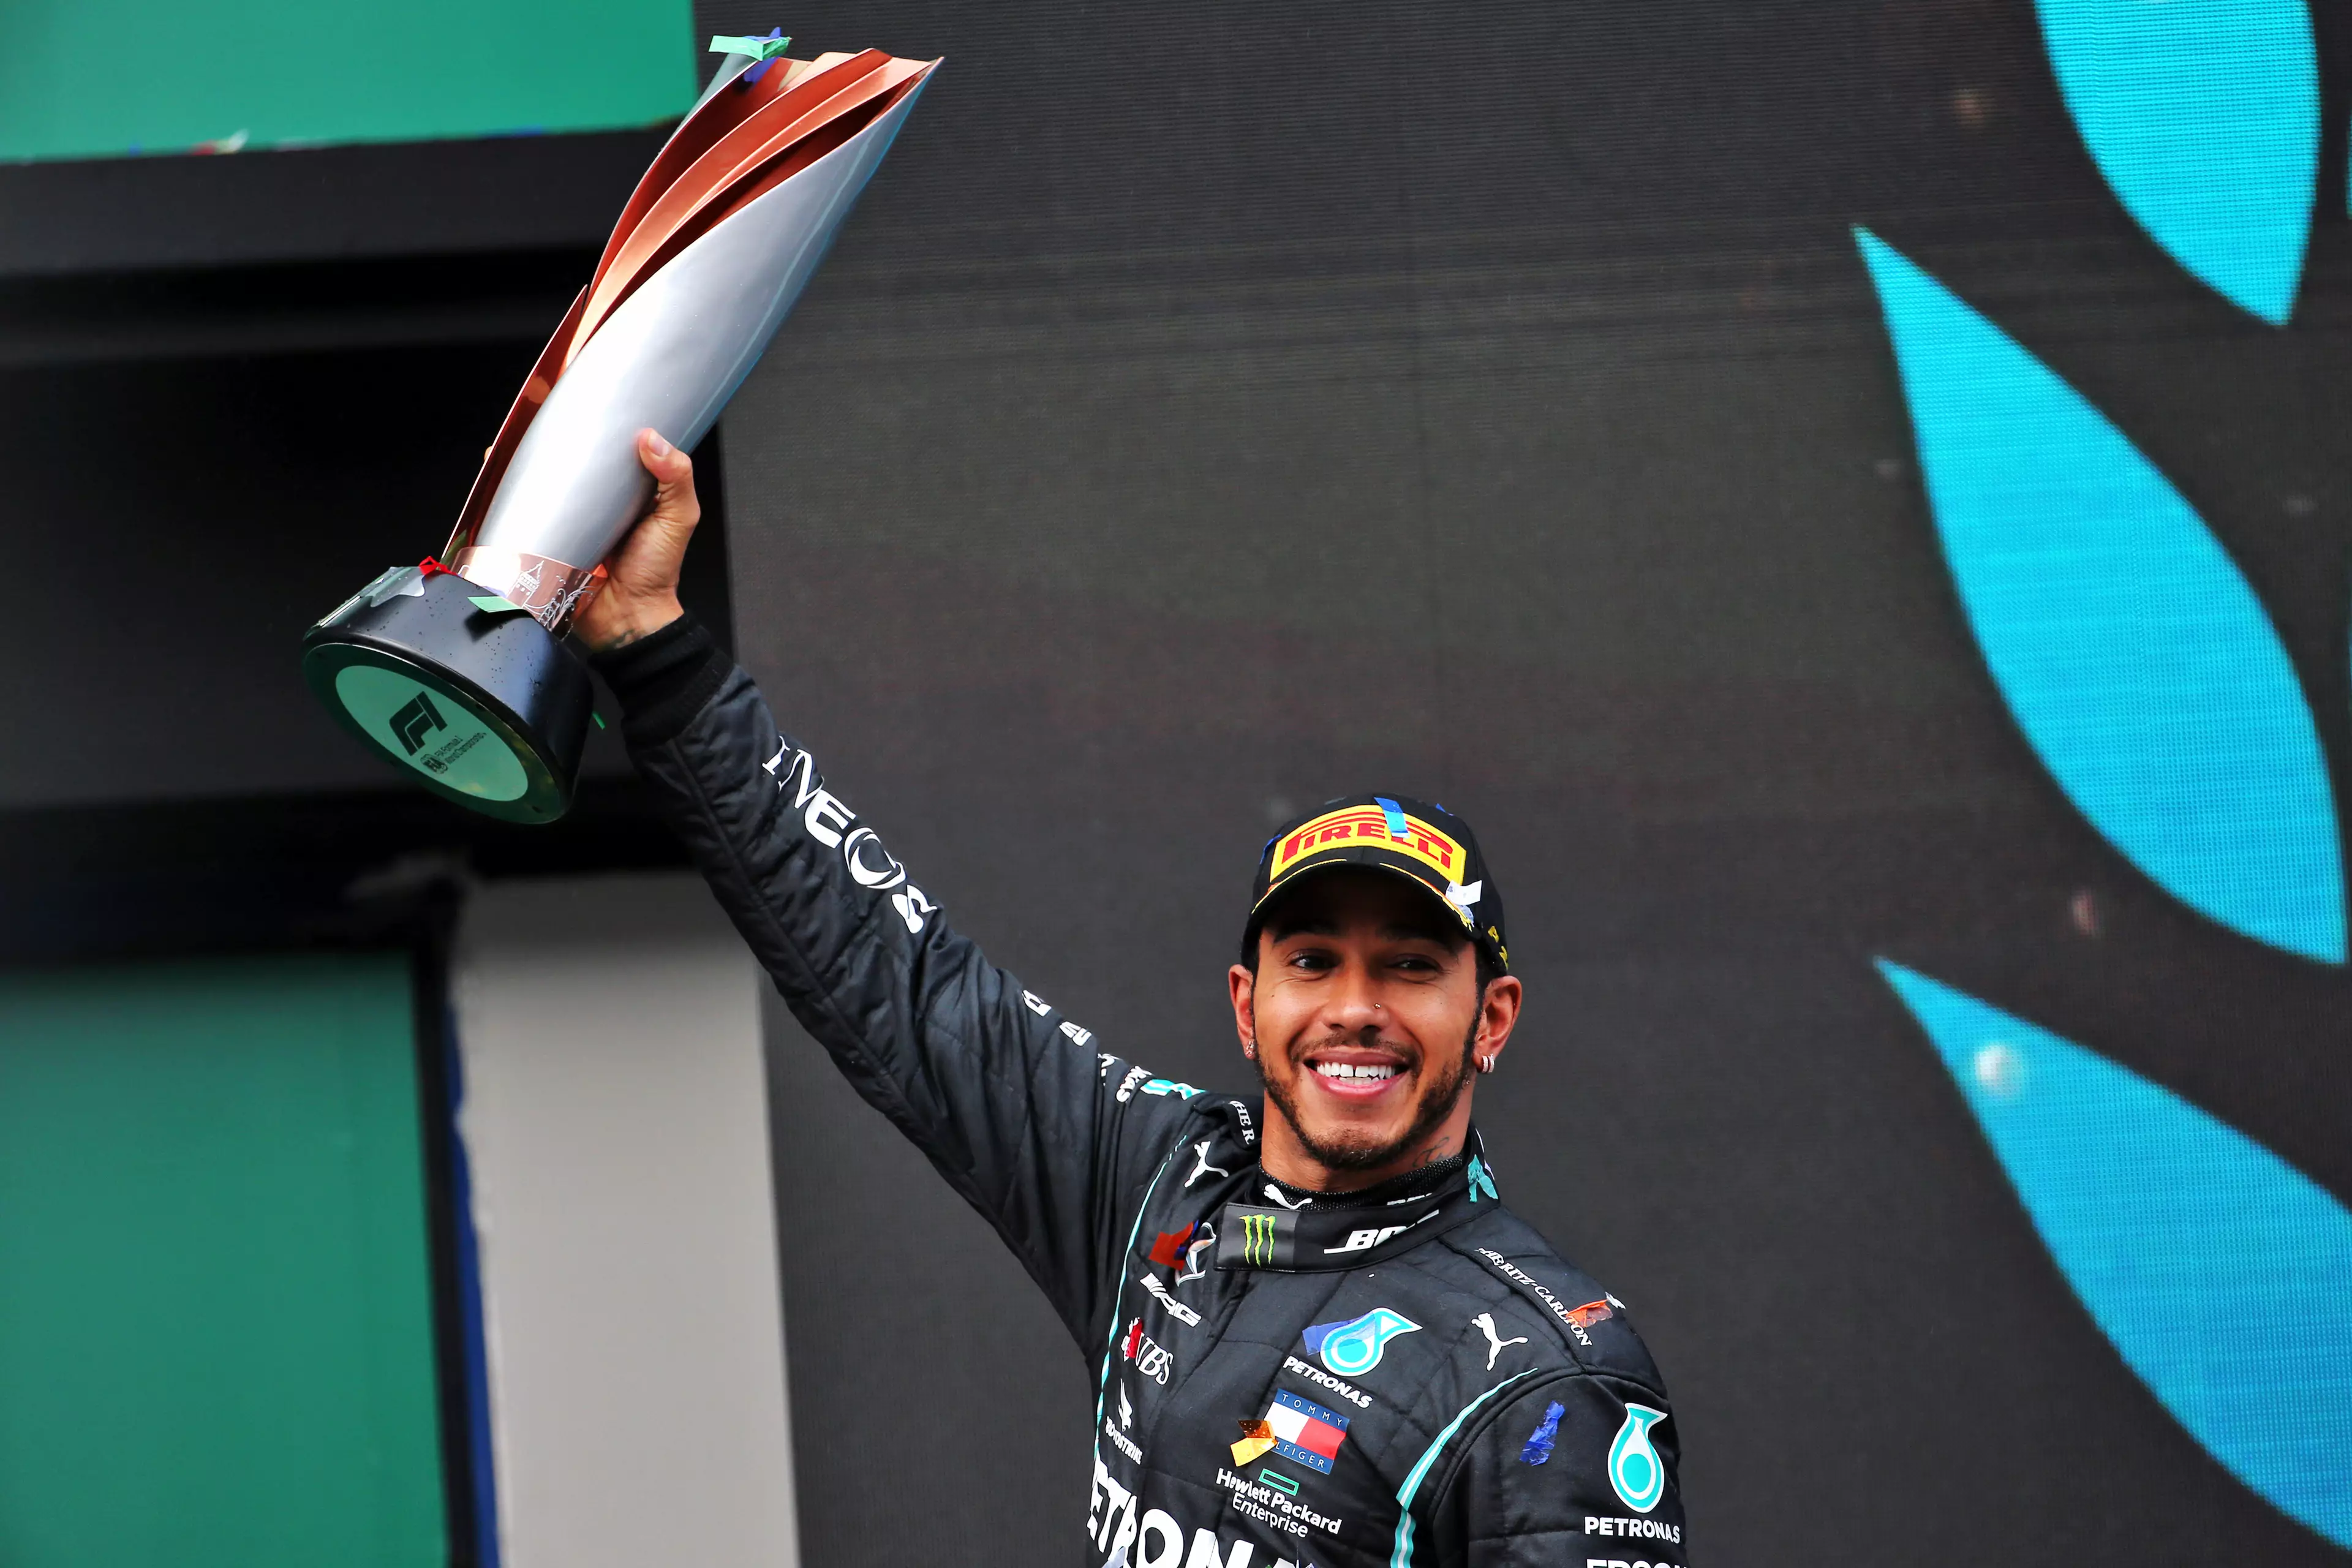 Lewis Hamilton celebrating his seventh world championship win at the Turkish Grand Prix this year.